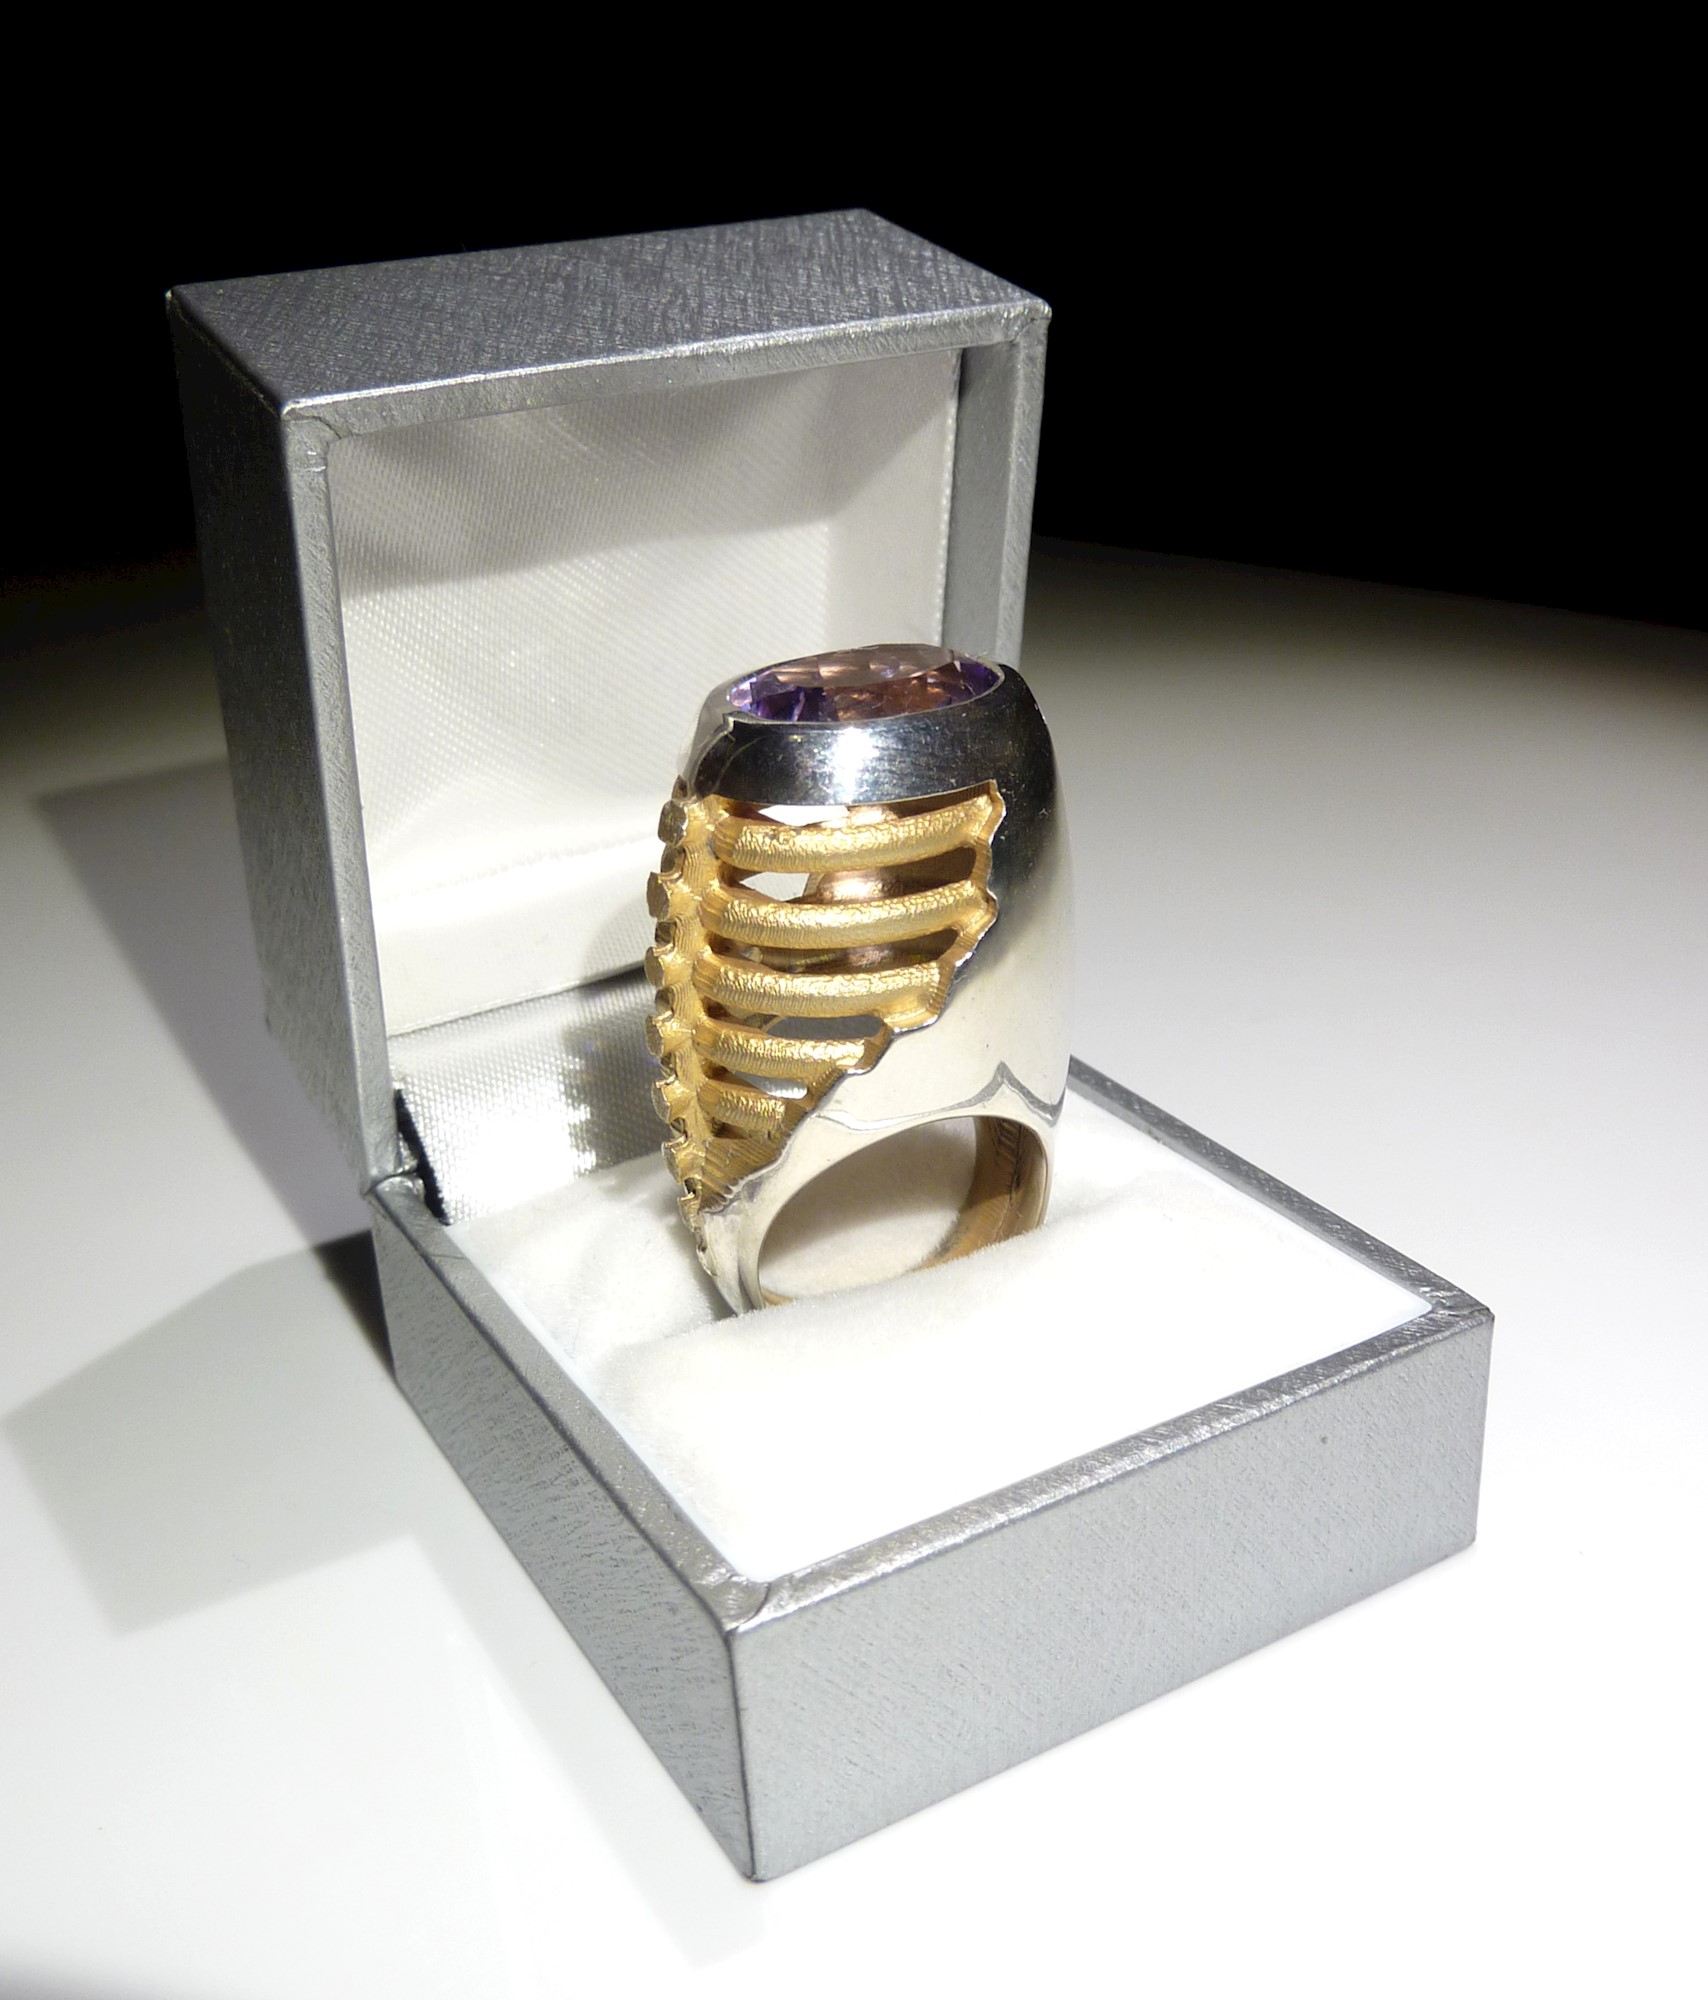 'Amethyst Backbone Cocktail Ring' by artist Inness Thomson